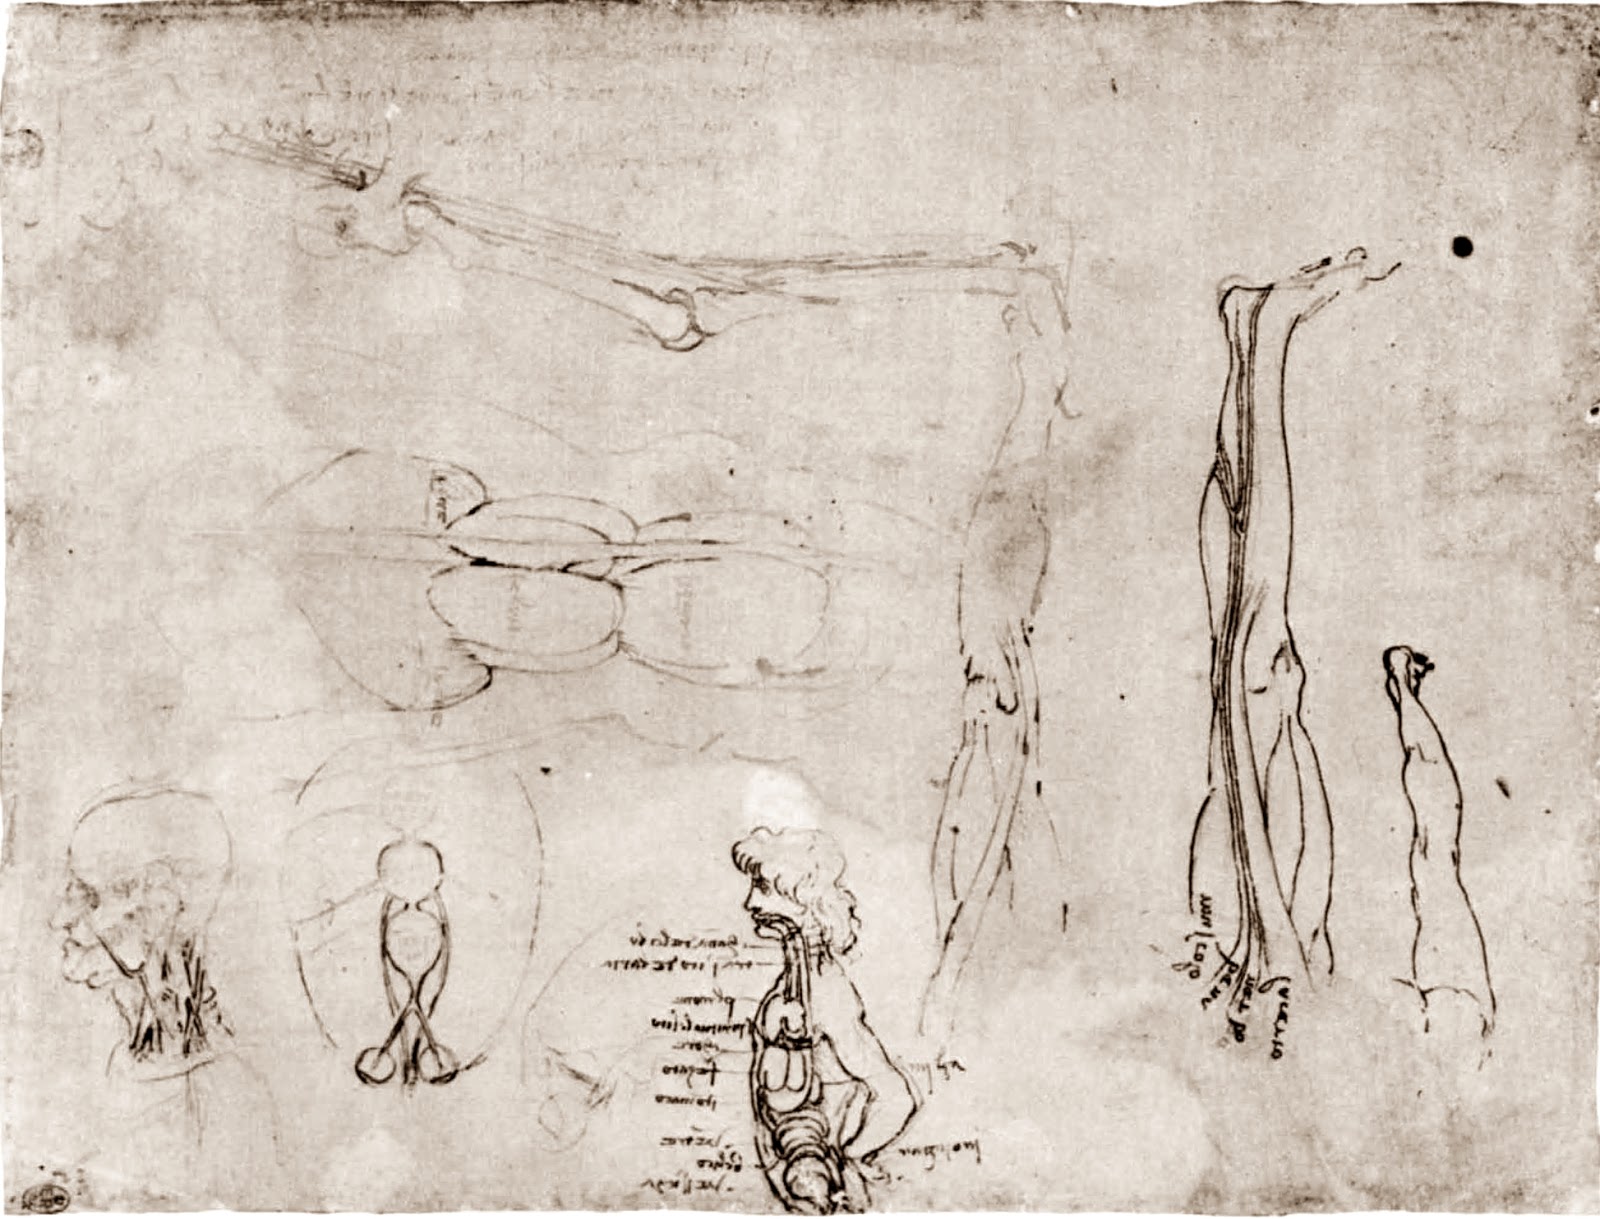 Leonardo+da+Vinci-1452-1519 (745).jpg